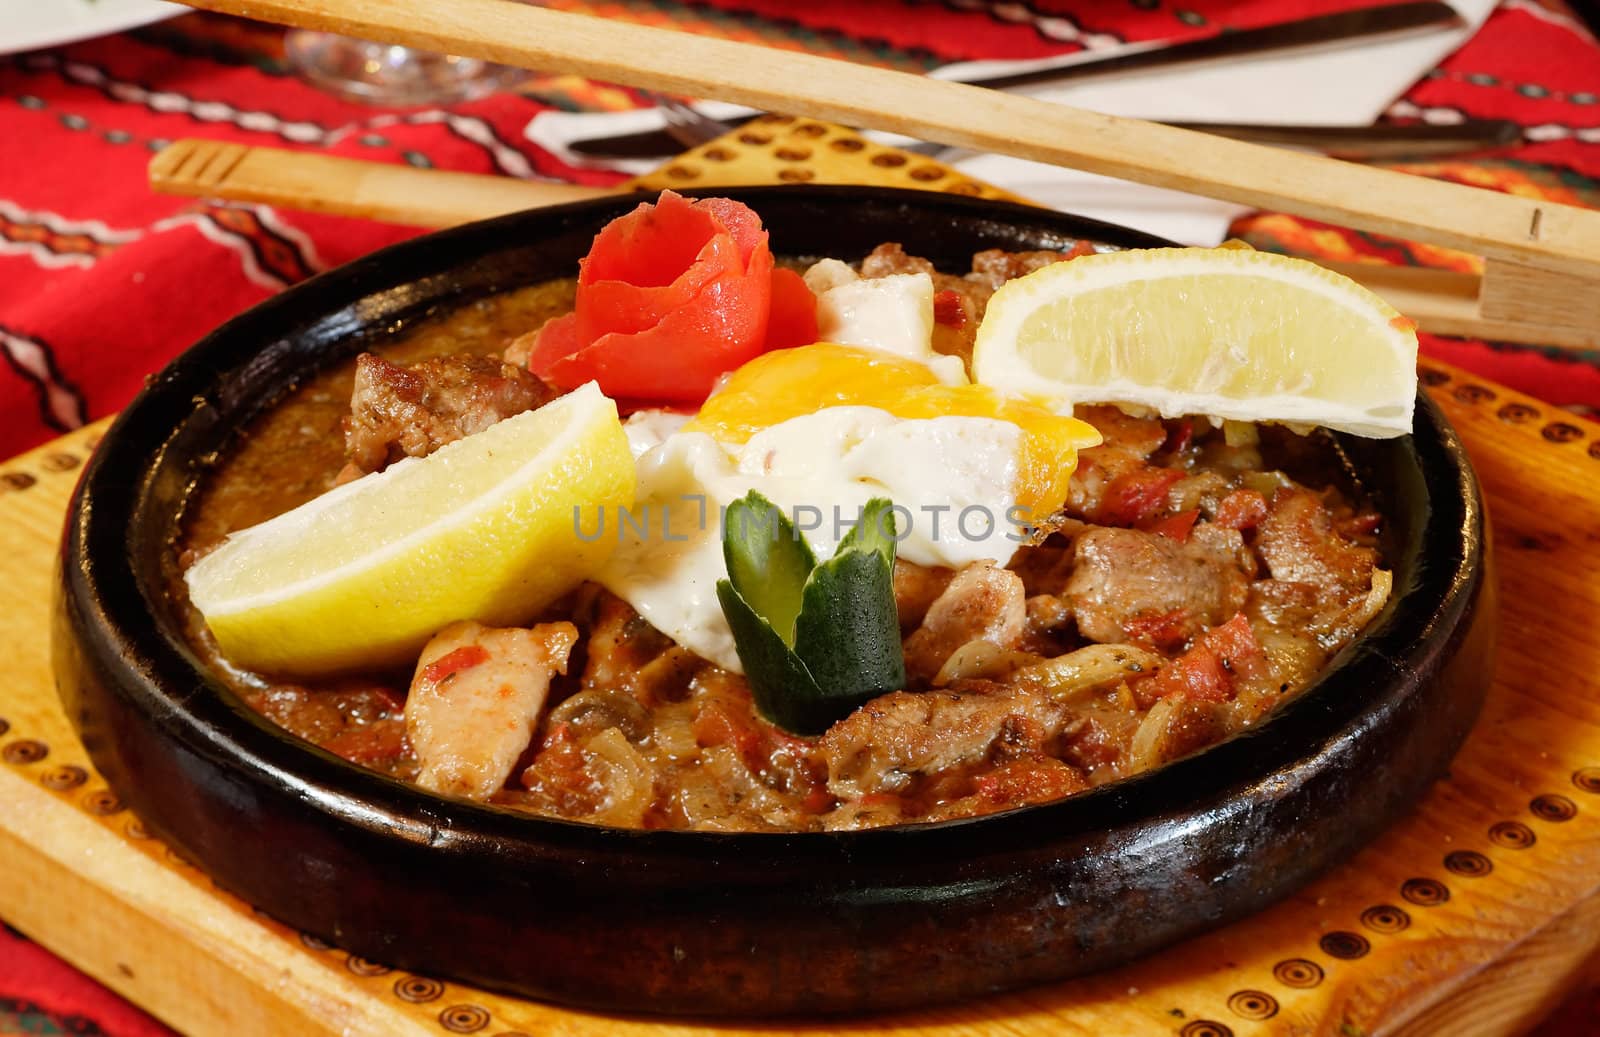 Sach - Bulgarian traditional food by ecobo